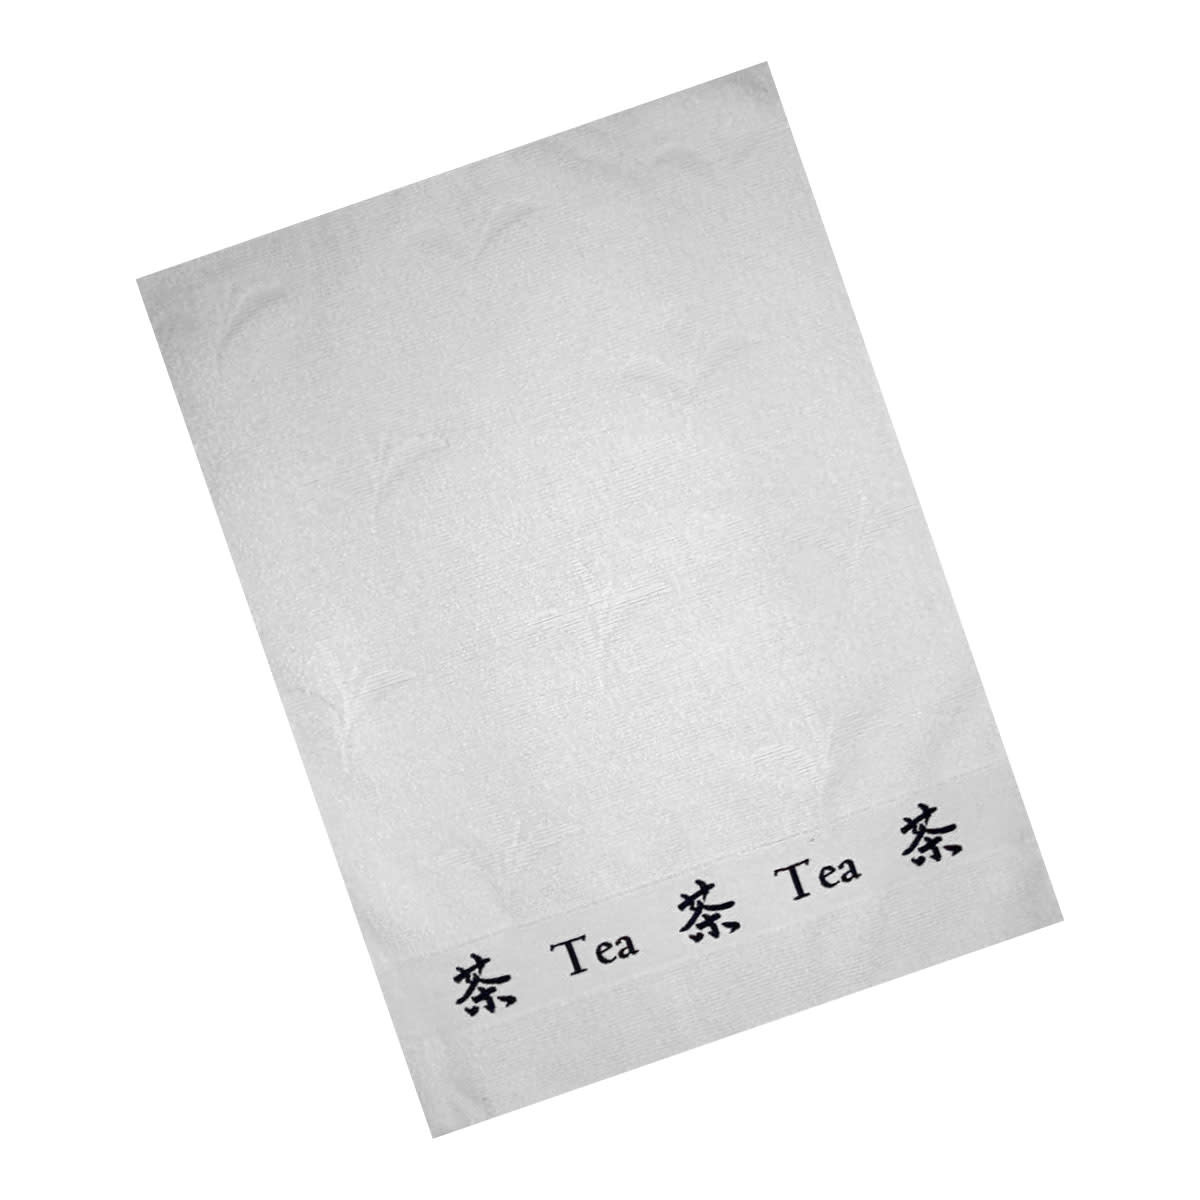 Textiles Tea Towel with Tea Border Design